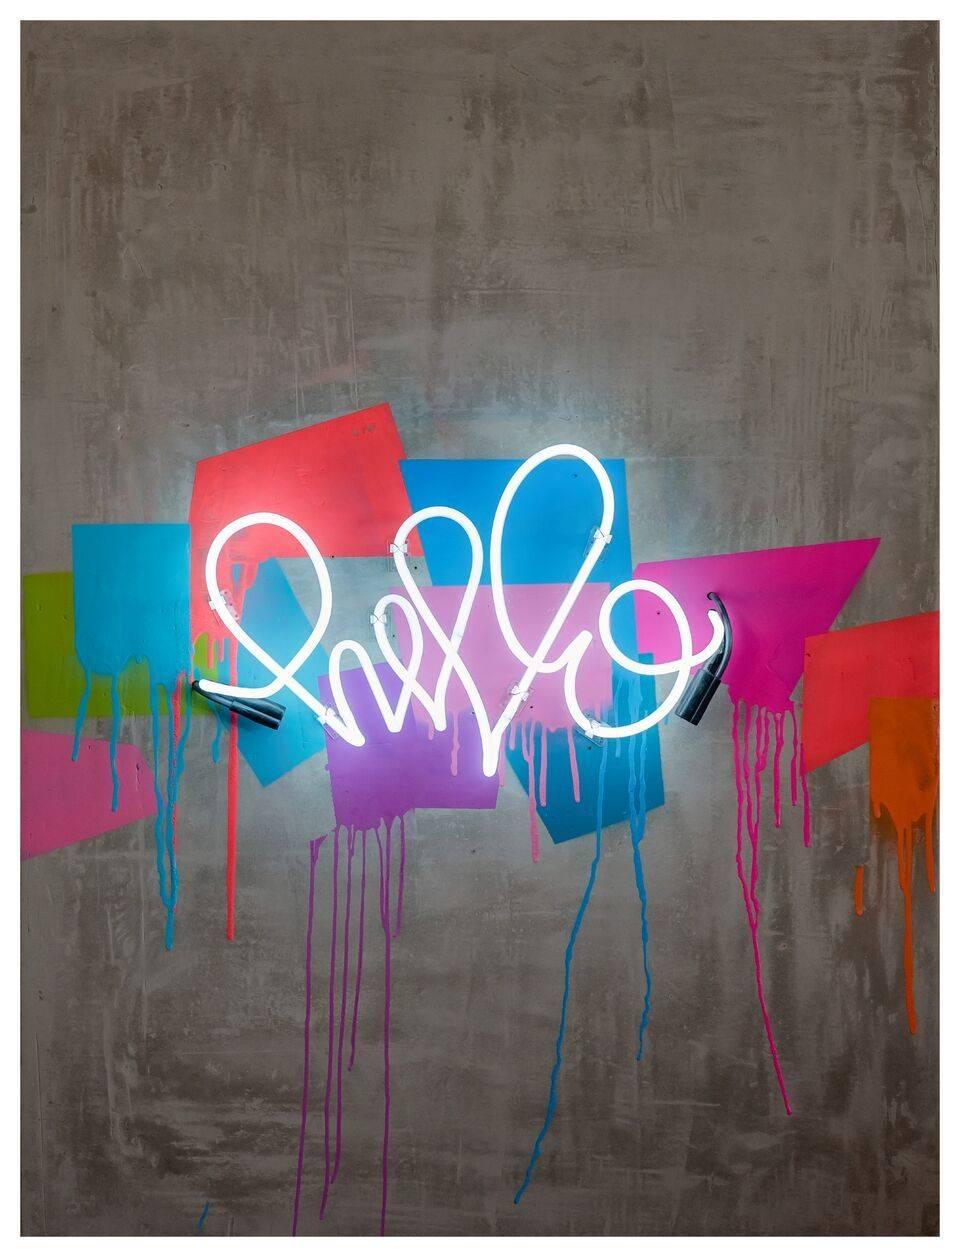 Hello Beautiful - Original Graffiti Painting - Contemporary - Neon on Wood - Mixed Media Art by Karlos Marquez